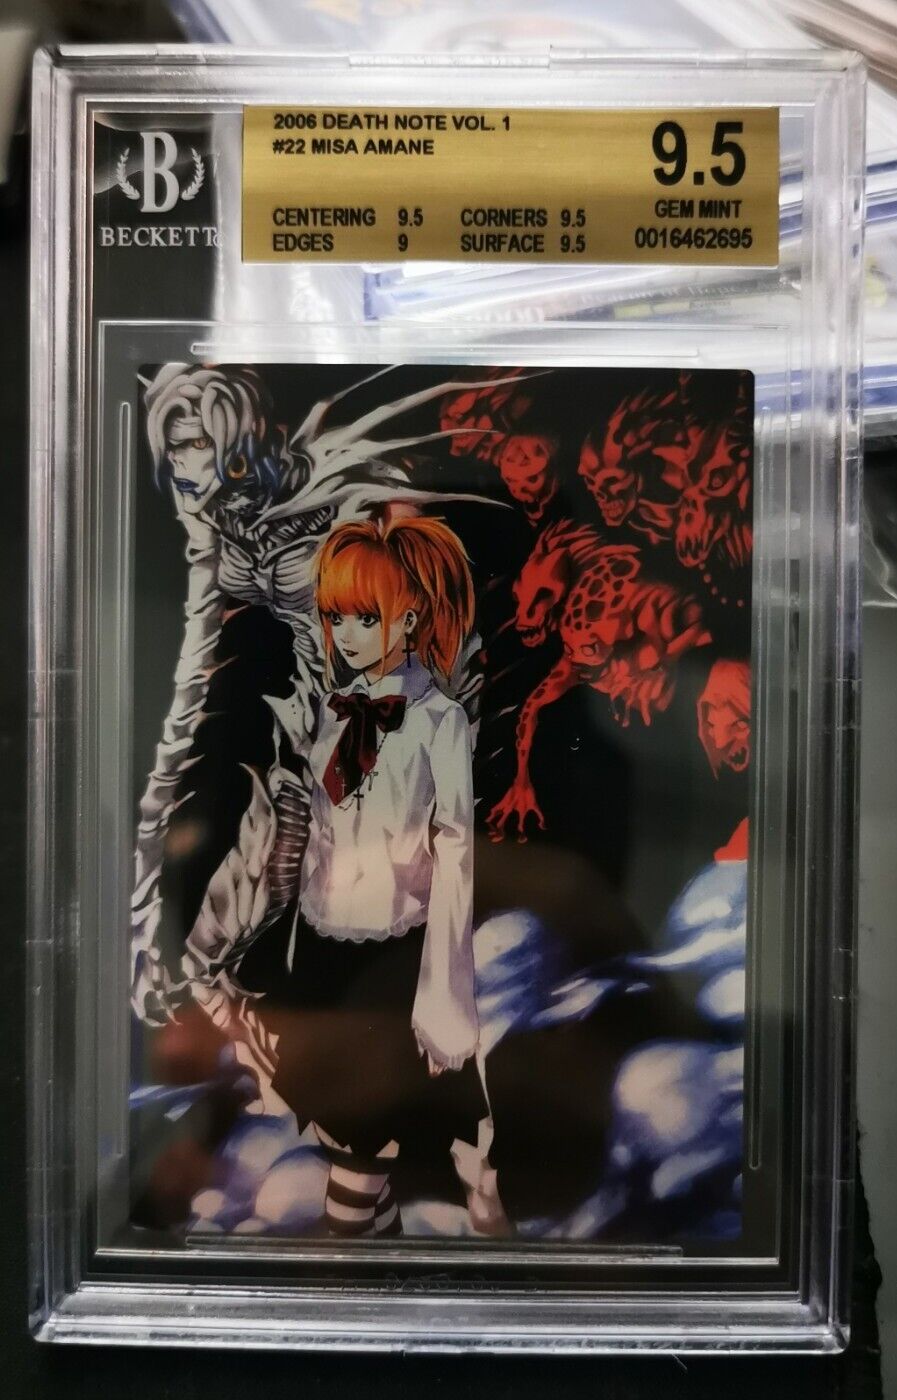 Death Note Vol.1 Misa Amane #22 BGS 9.5 Trading Card Game TCG